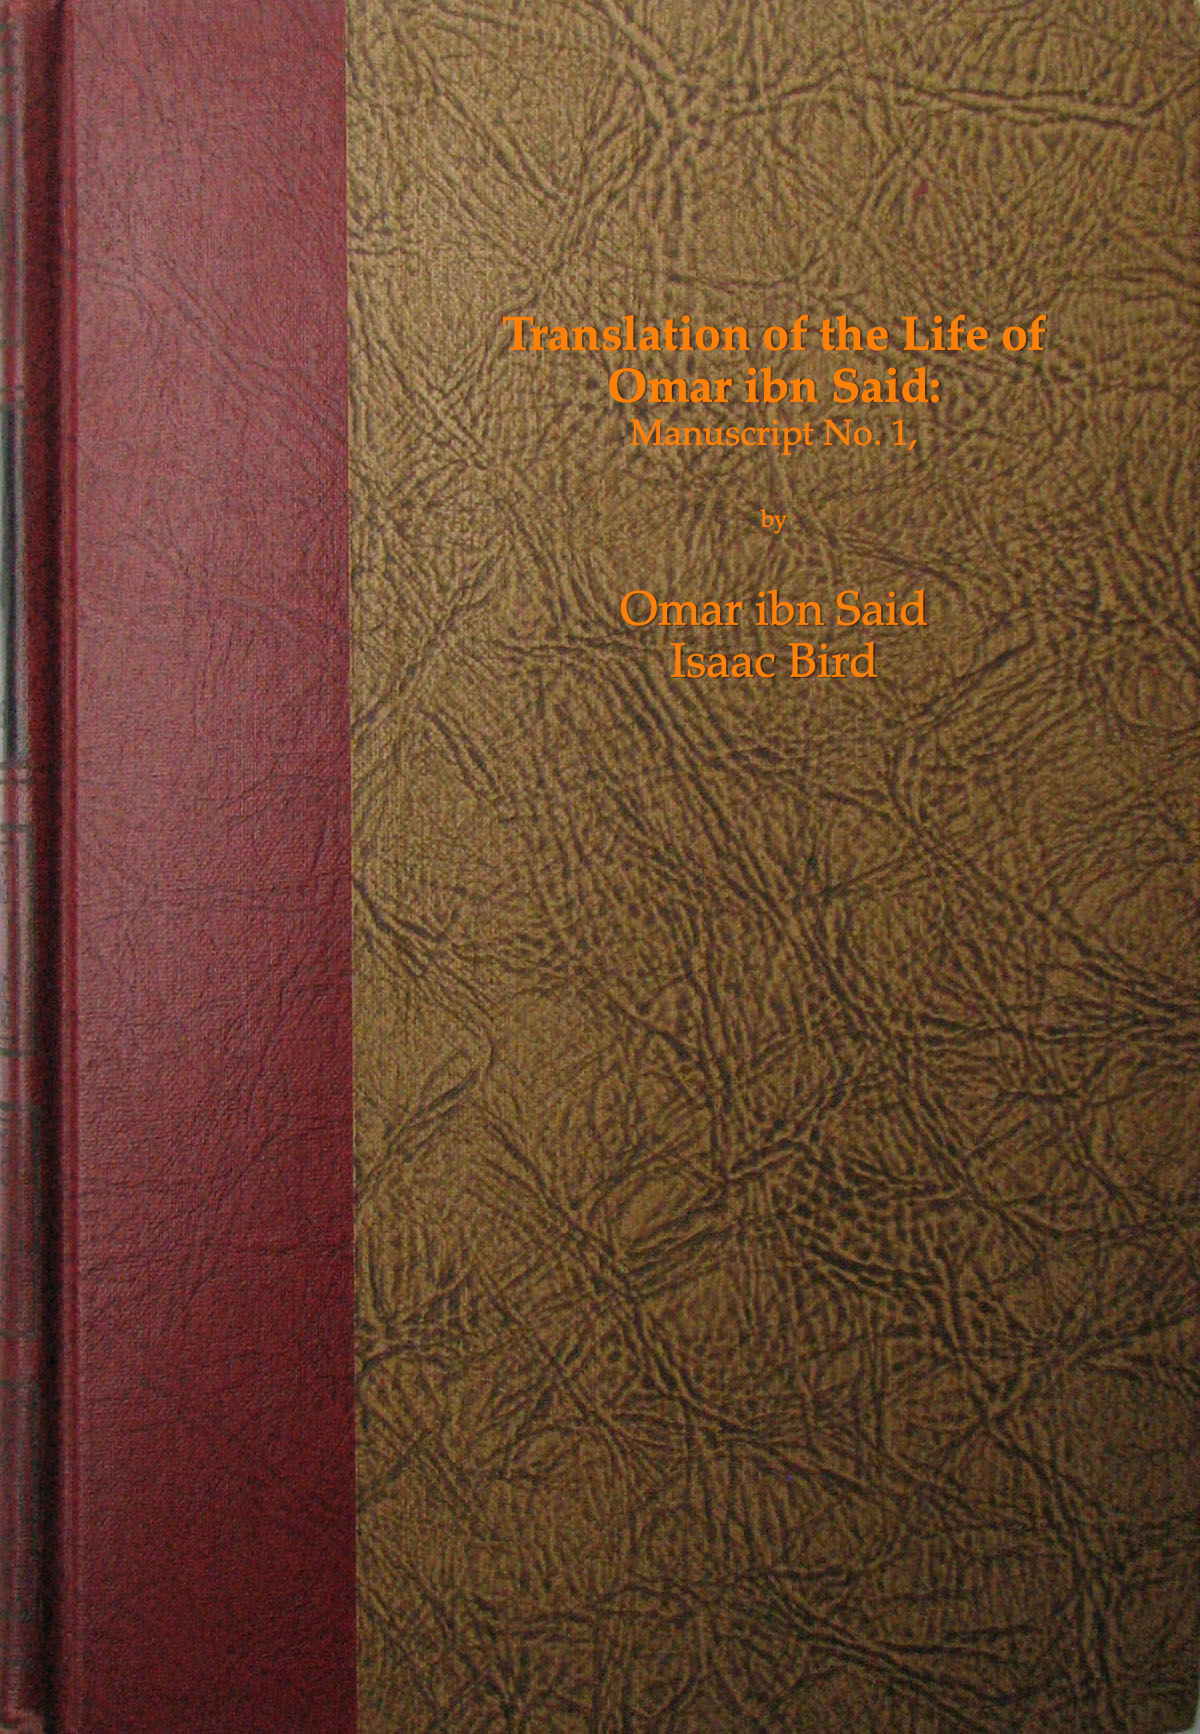 ibn said manuscript